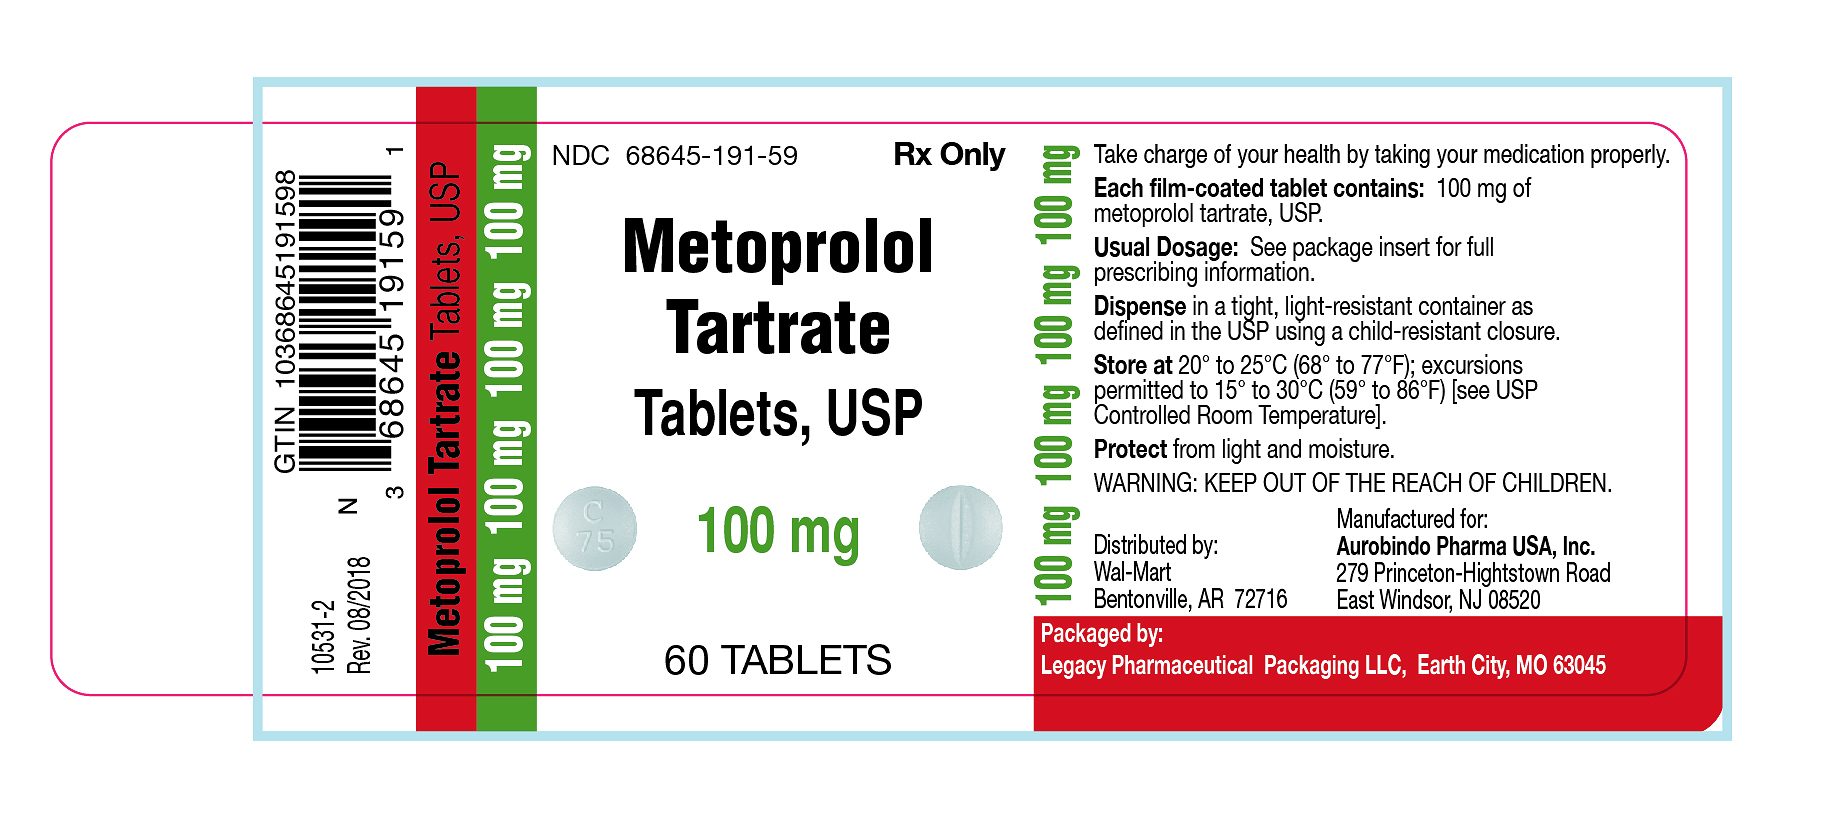 Metoprolol Tartrate Tablets, USP 100mg